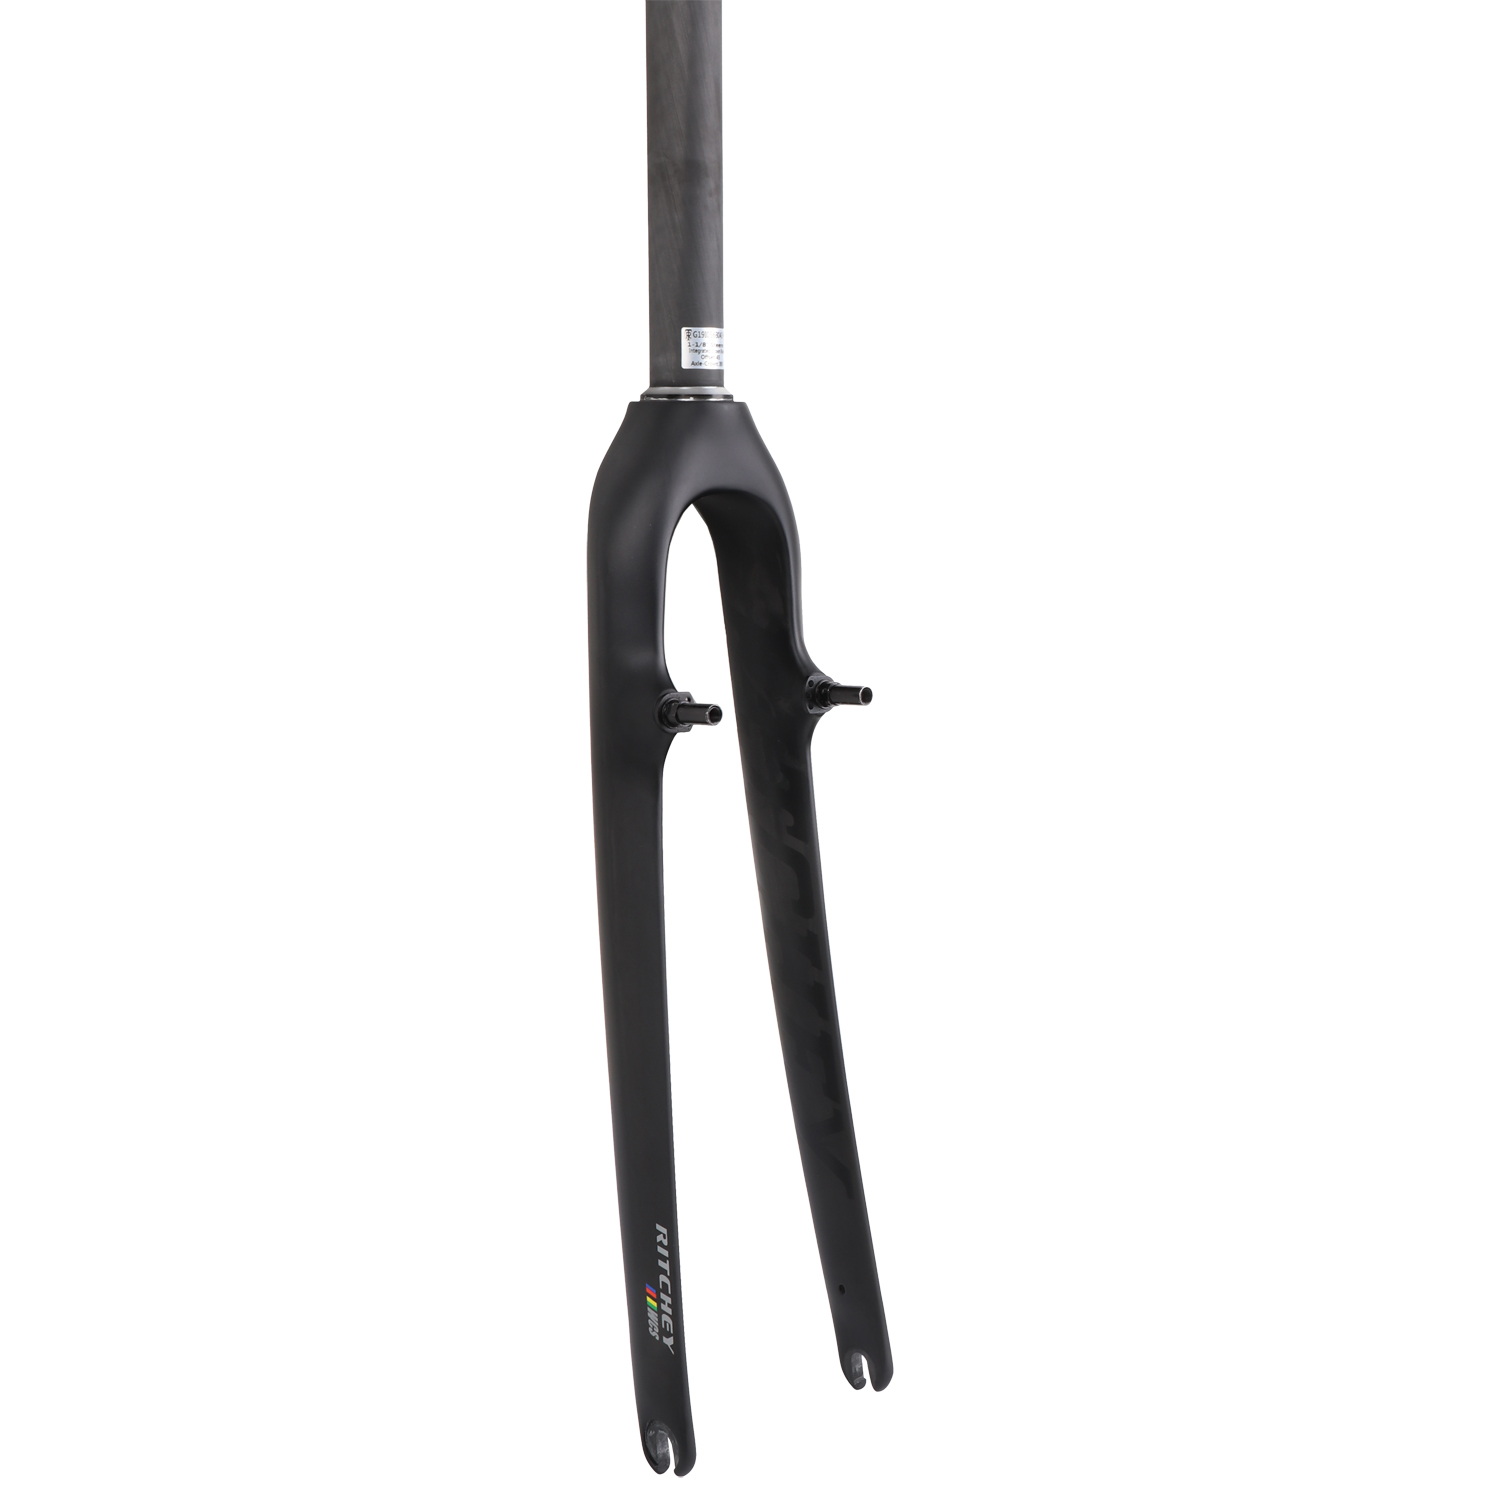 Productfoto van Ritchey WCS Carbon Cross Fork - 1 1/8 Inch - Cantilever - QR - Matte UD Carbon